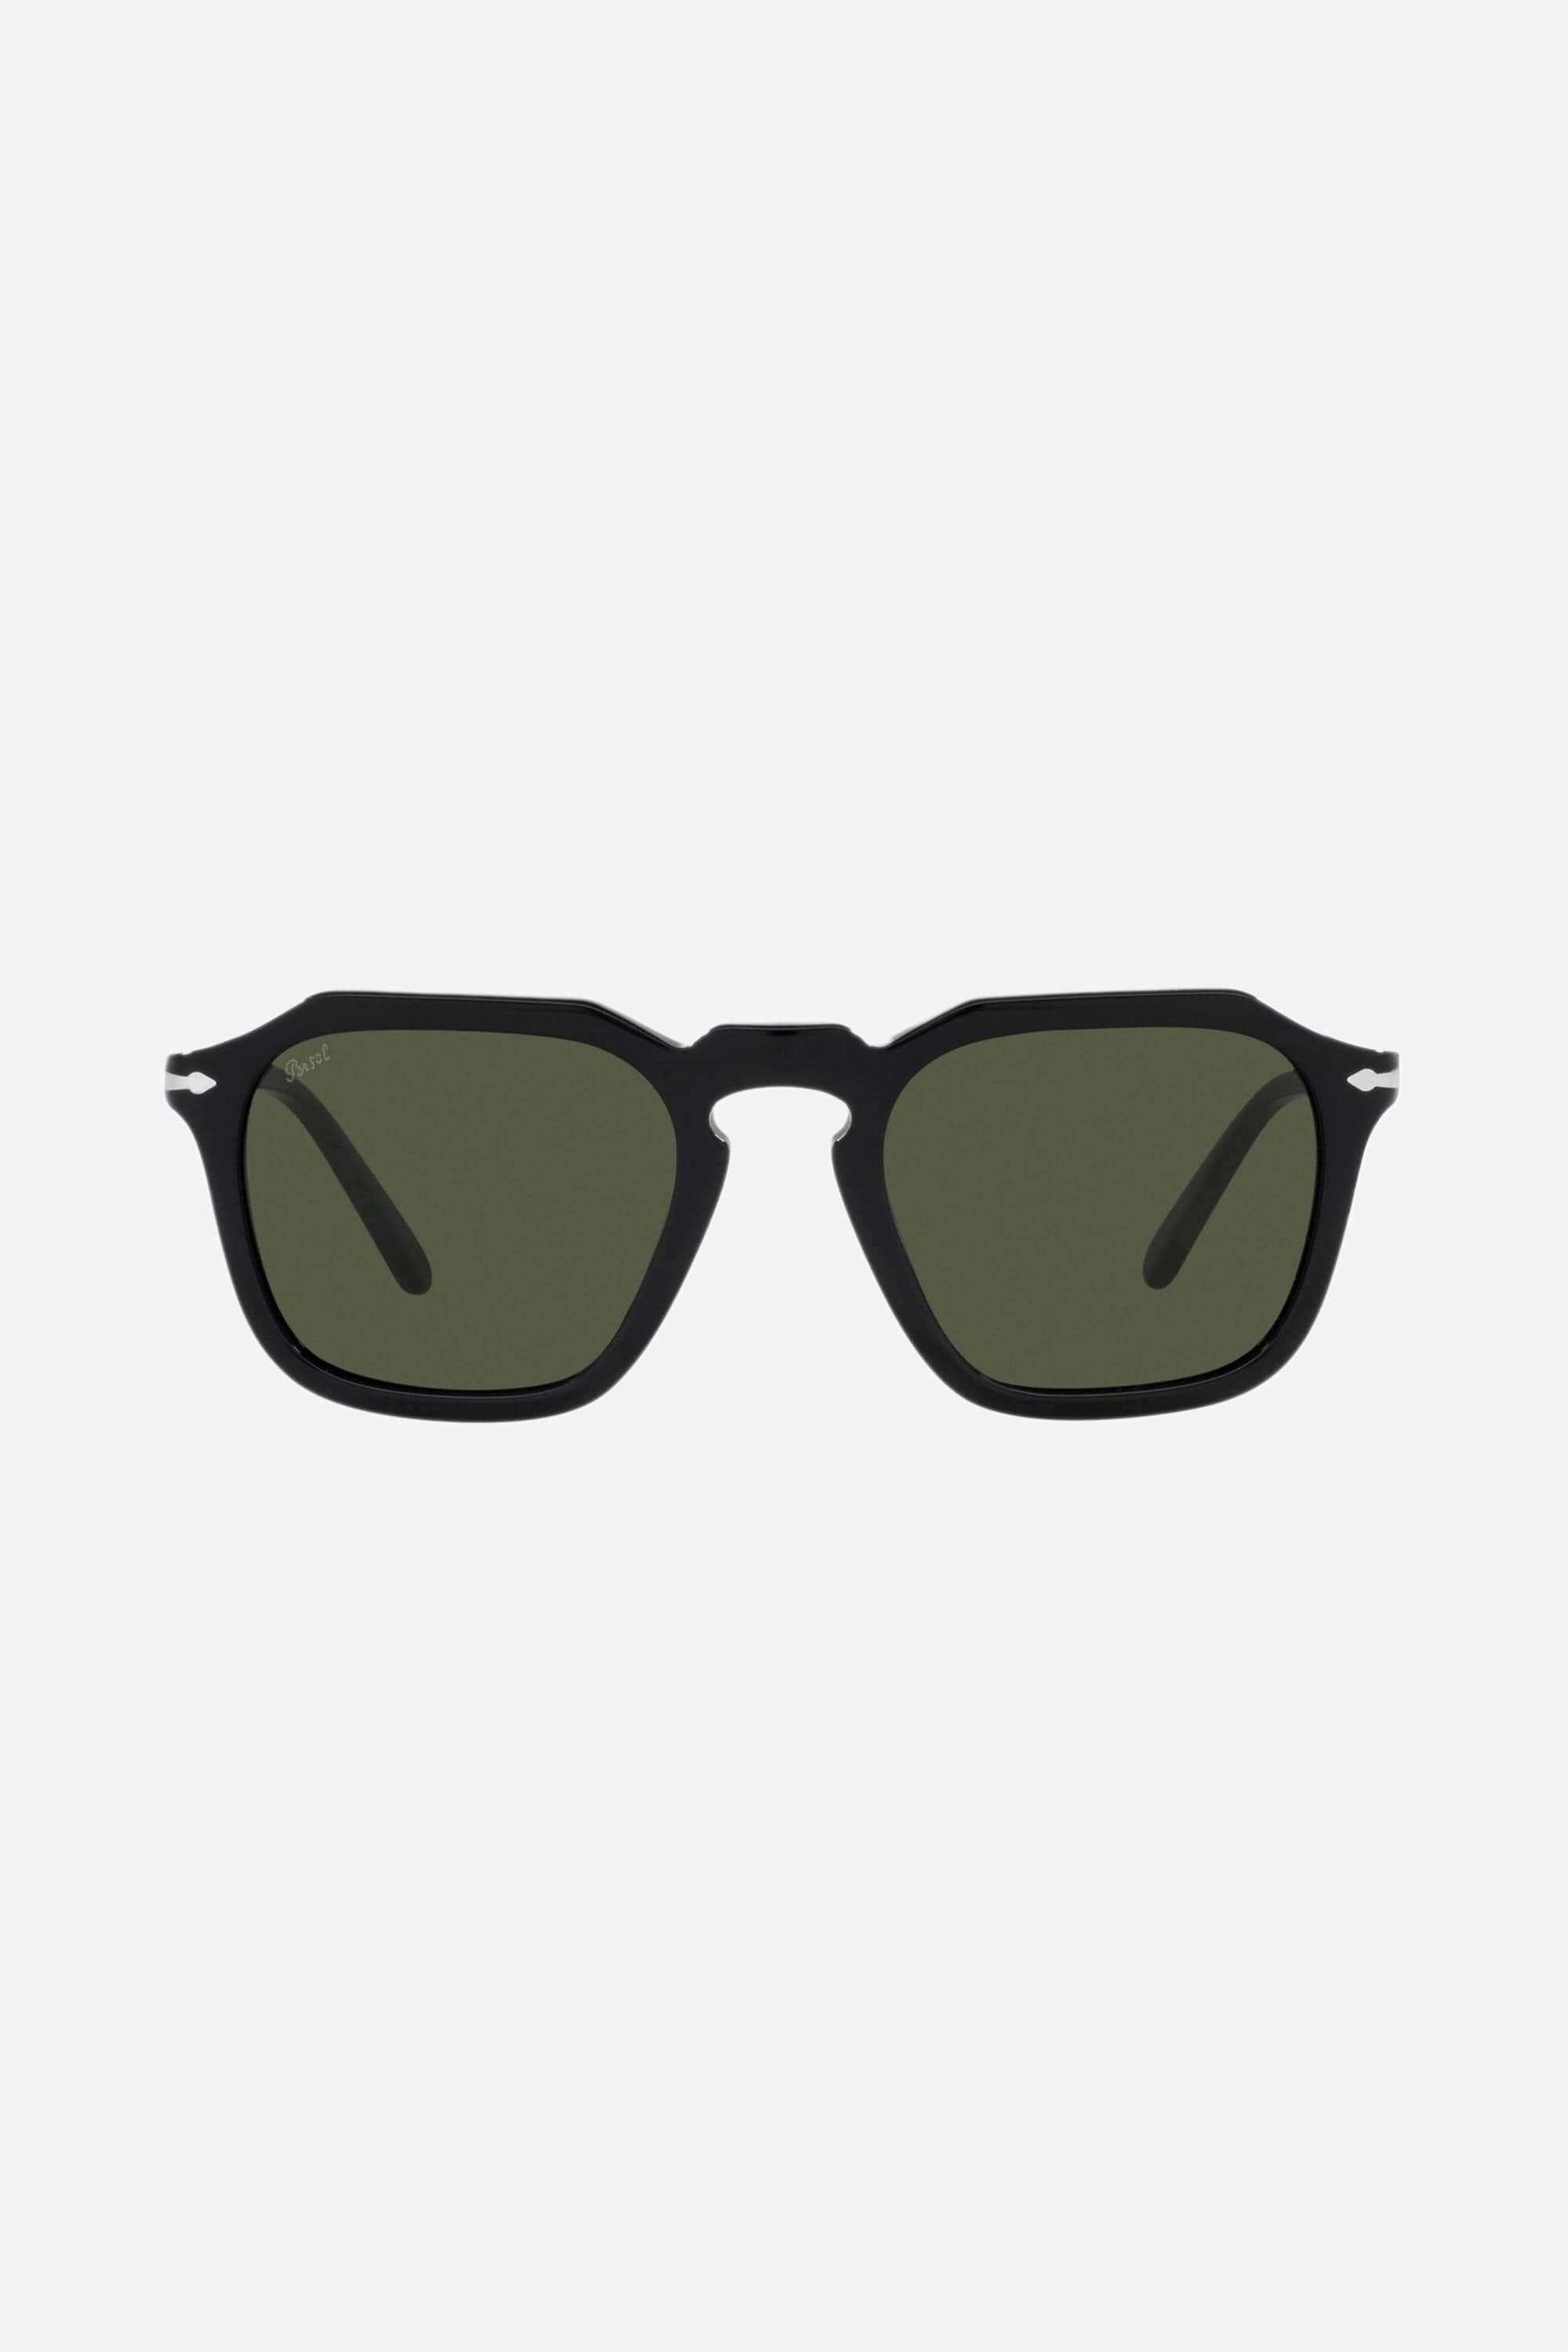 Persol round hexagonal black sunglasses - Eyewear Club